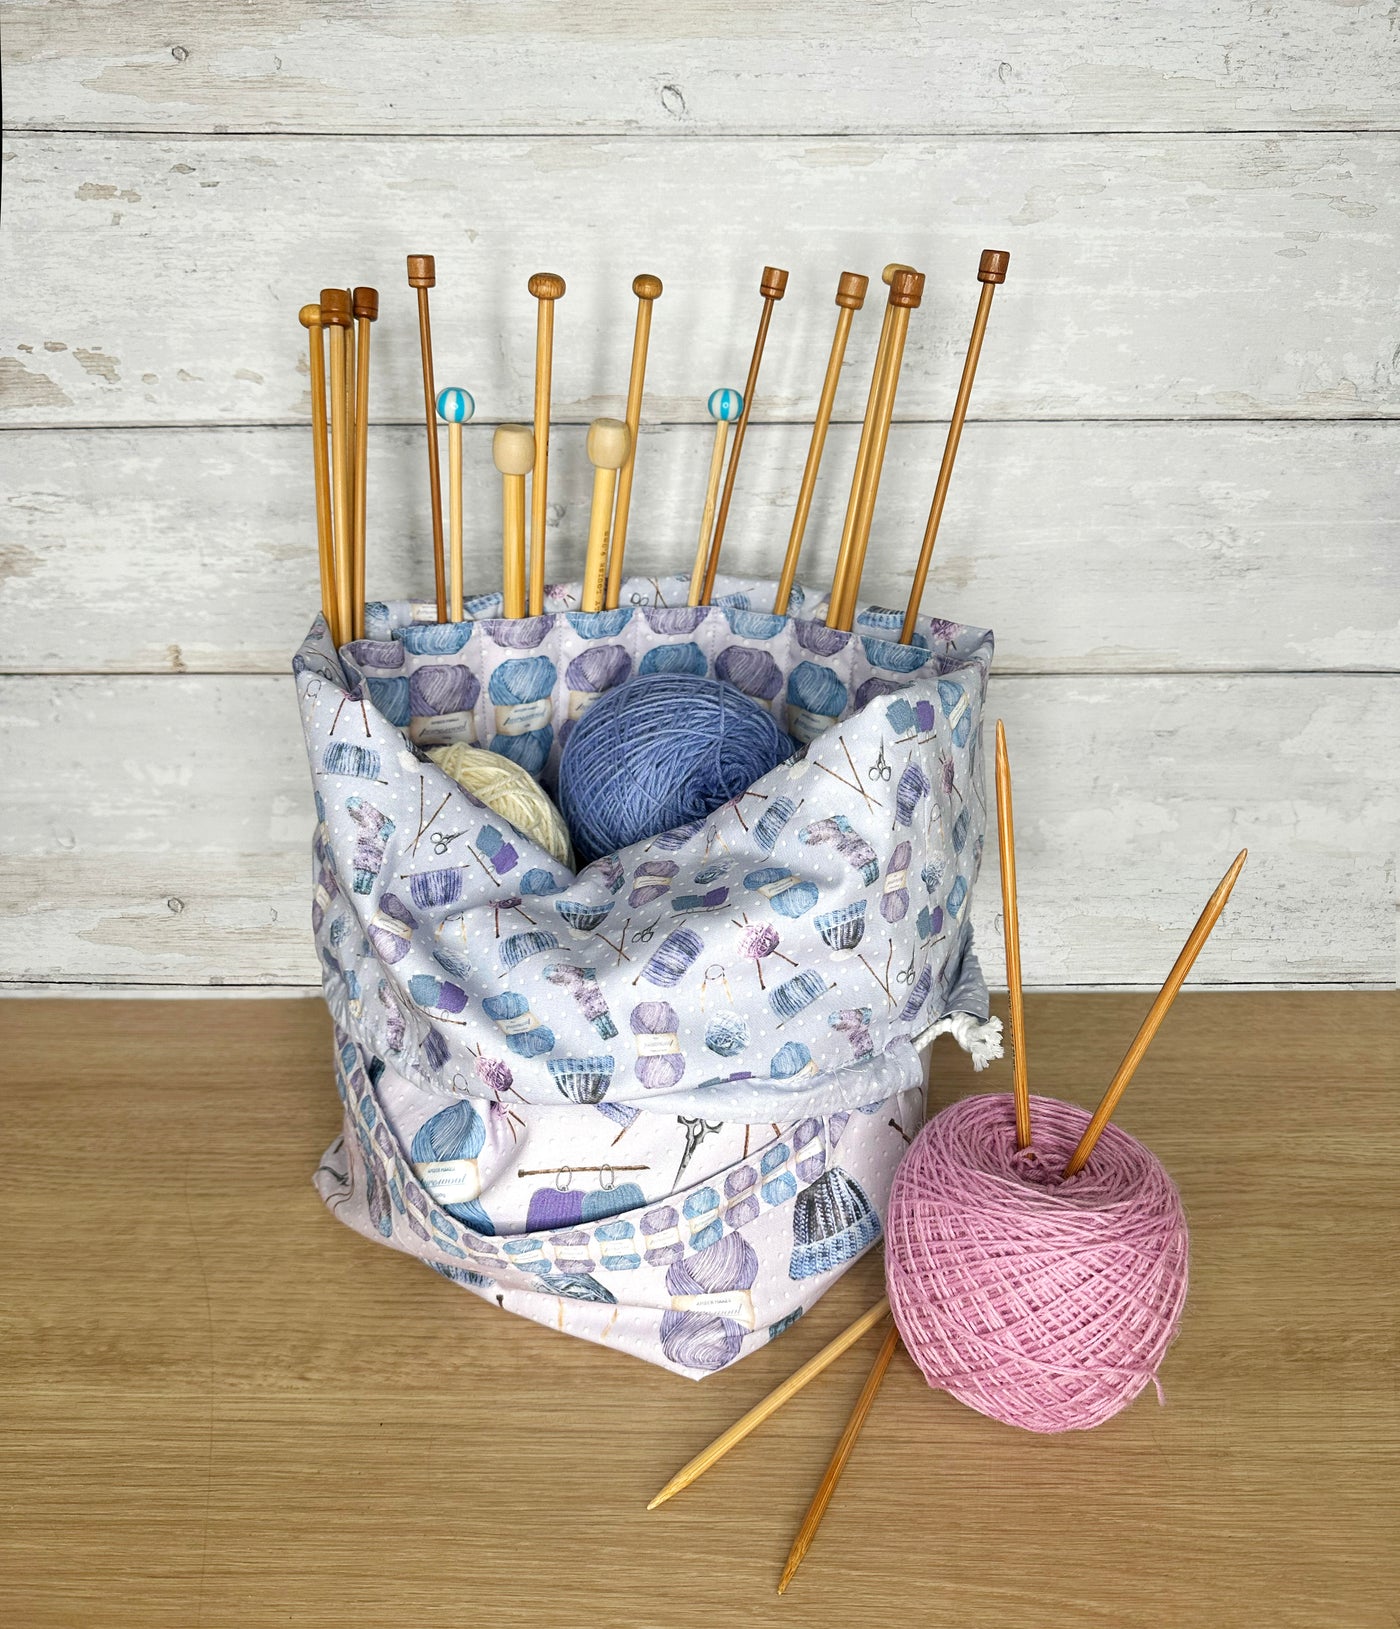 The Knitting Duffle Tote Kit